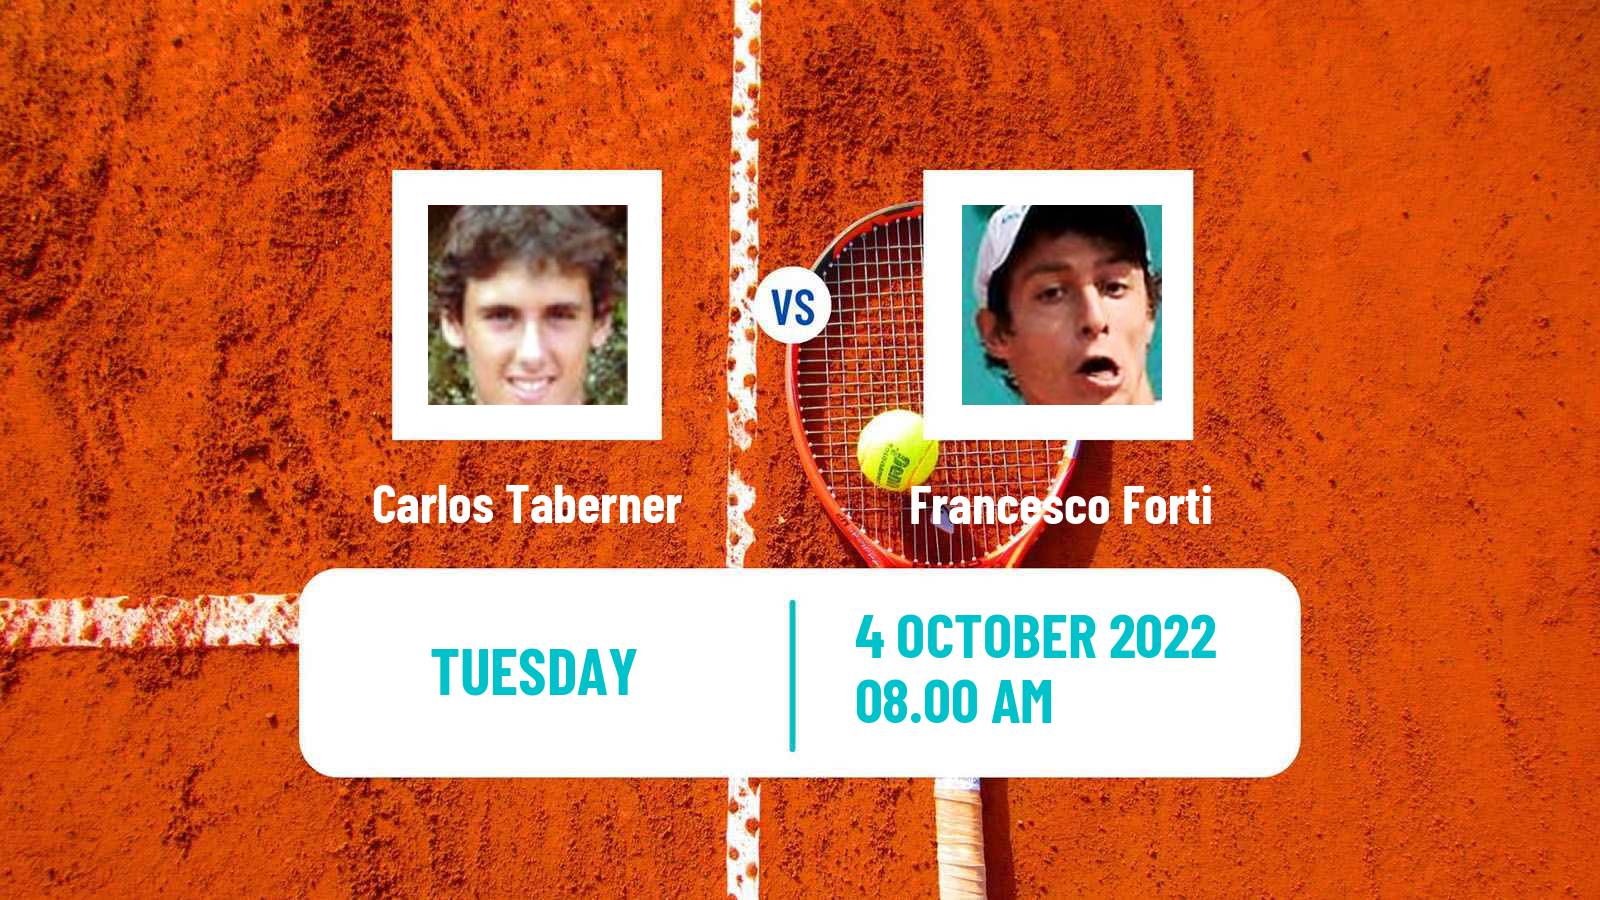 Tennis ATP Challenger Carlos Taberner - Francesco Forti